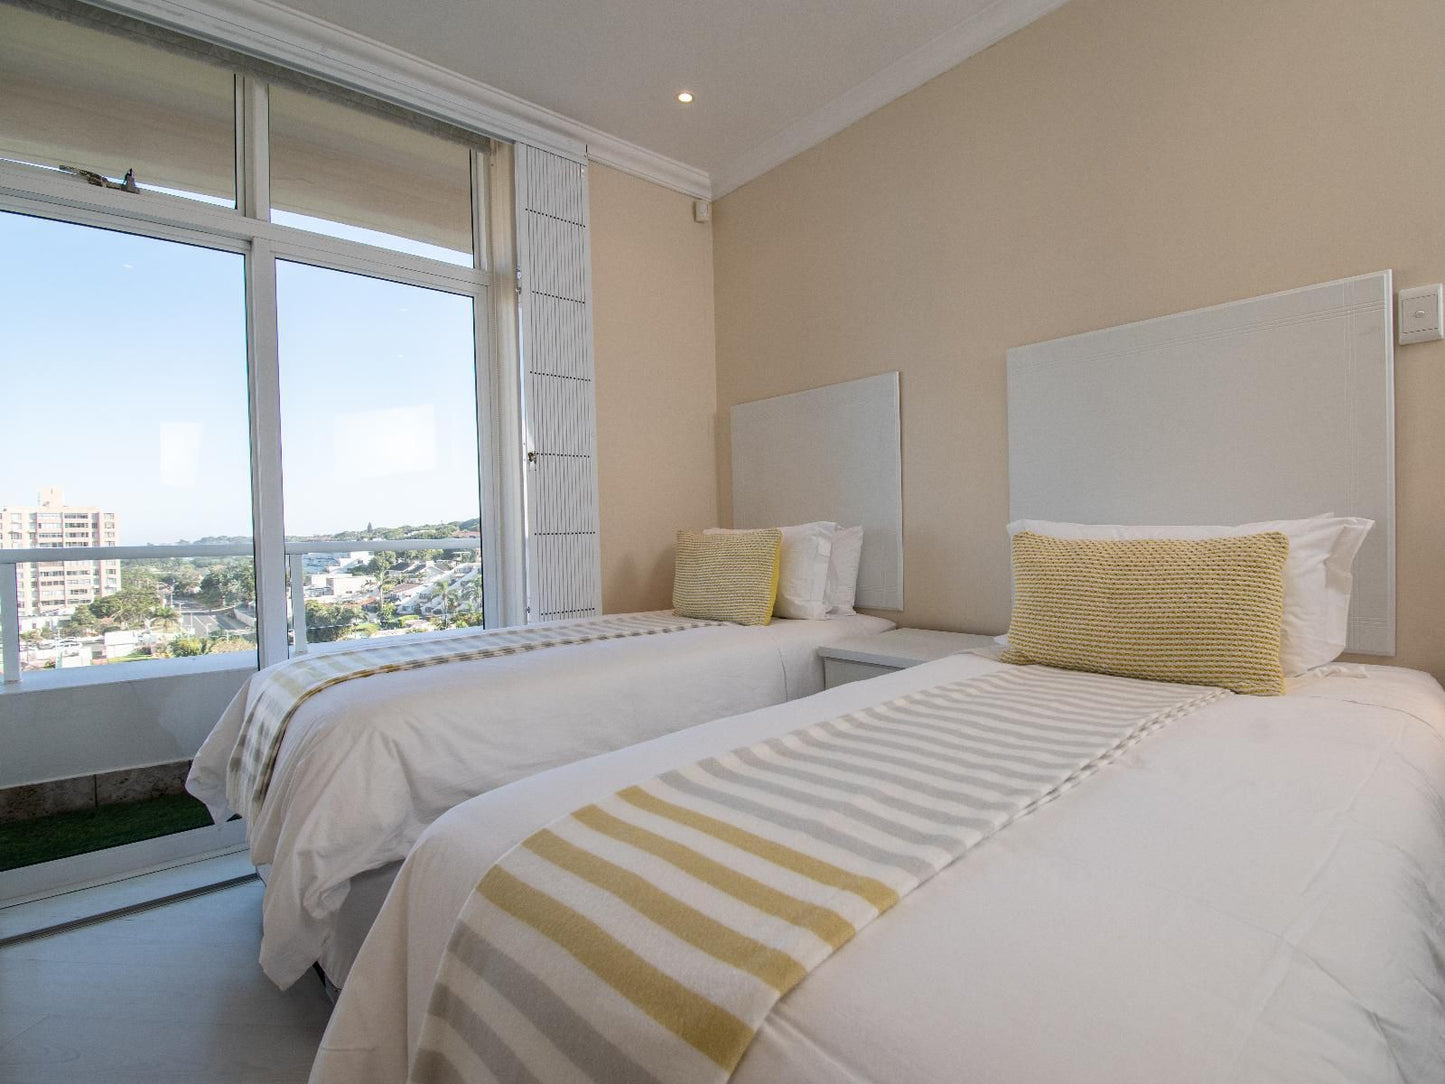 403 Oyster Schelles Umhlanga Durban Kwazulu Natal South Africa Bedroom